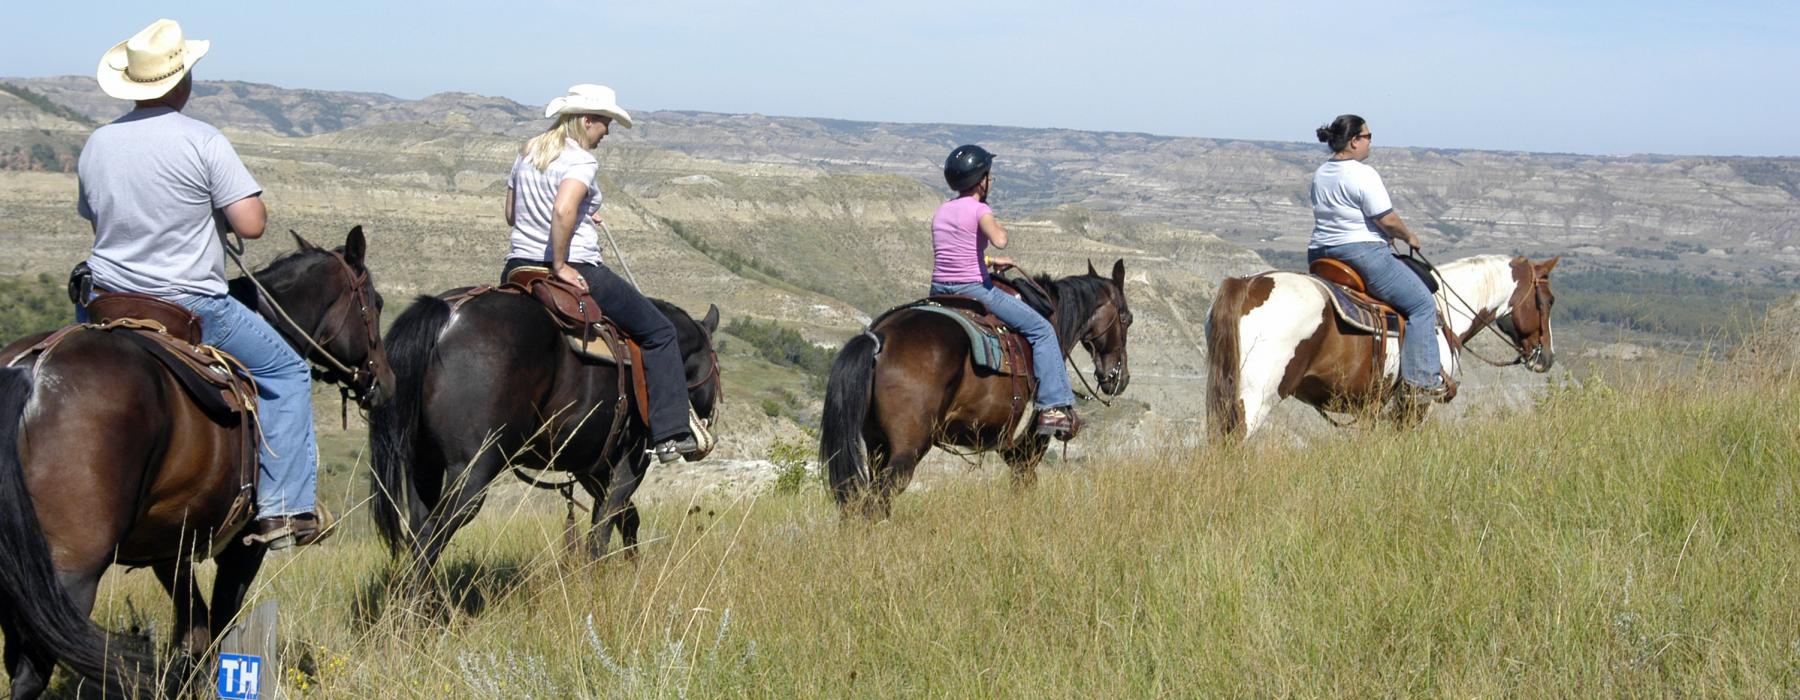 Horseback Riding North Dakota Parks and Recreation